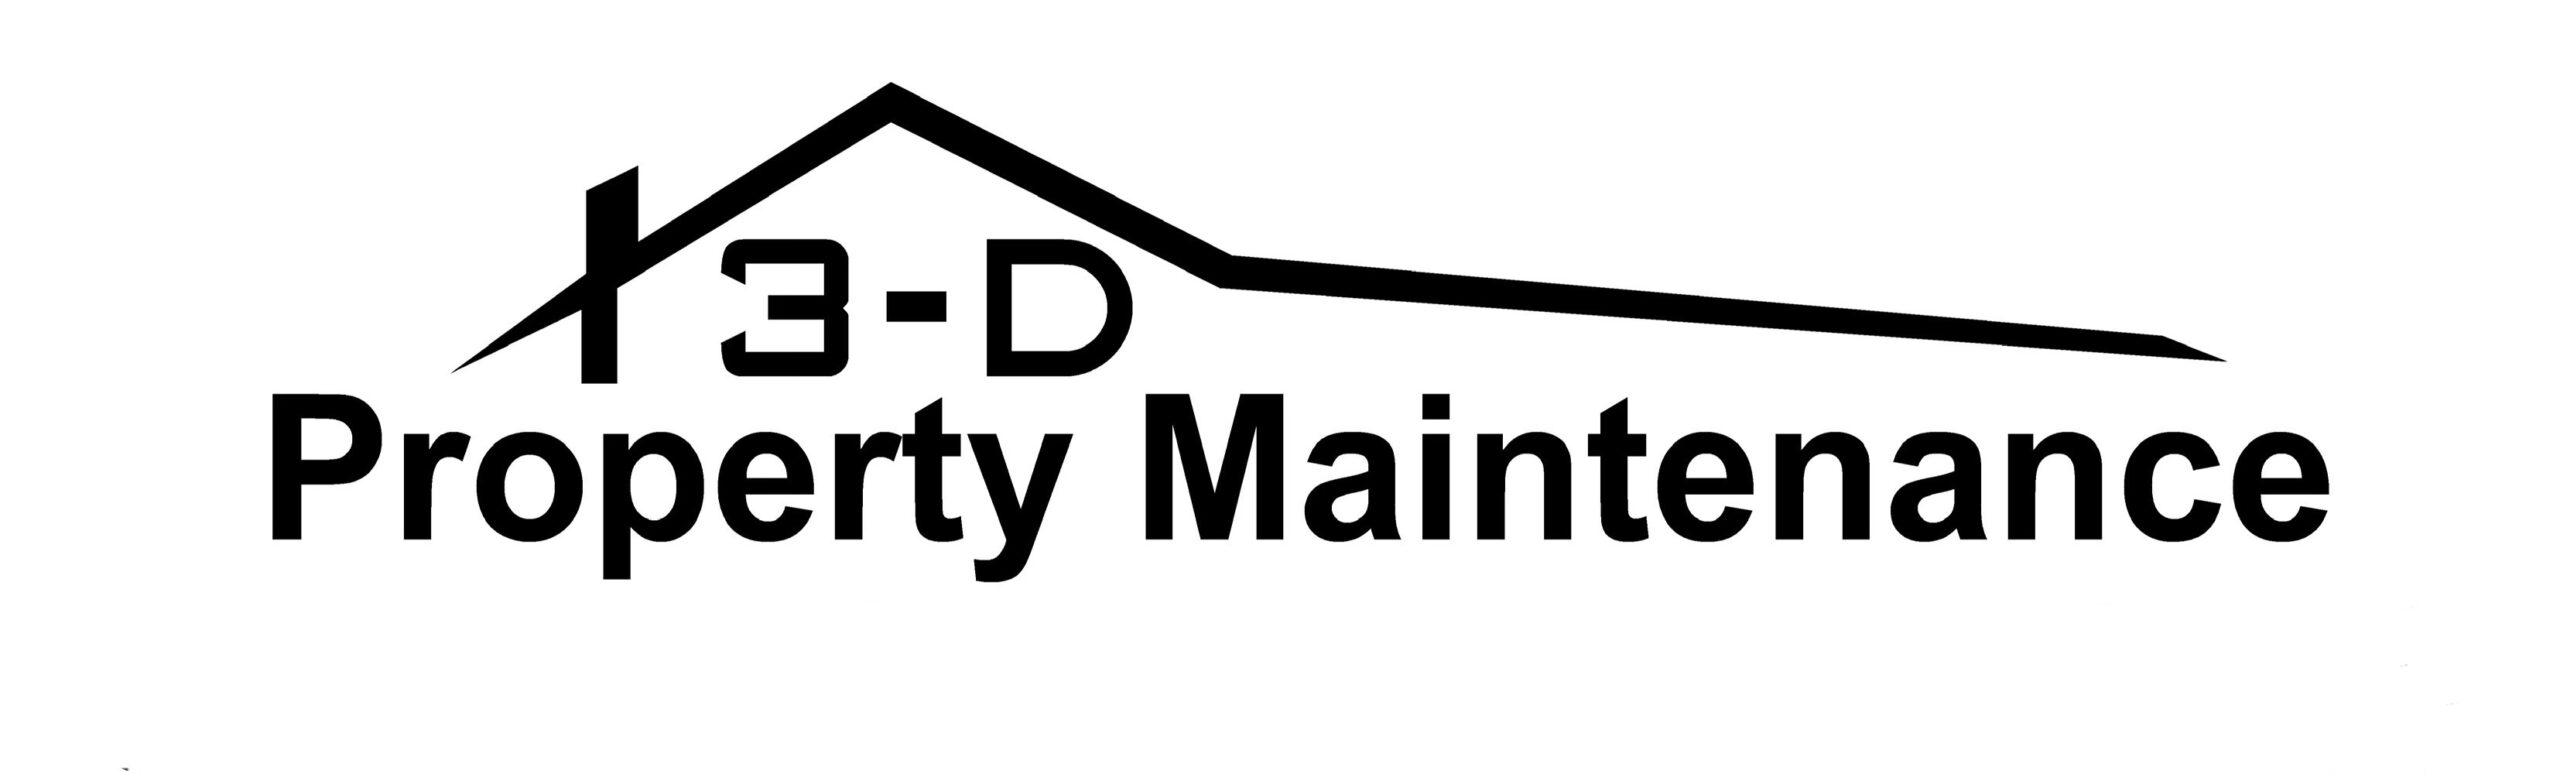 3D Property Maintenance